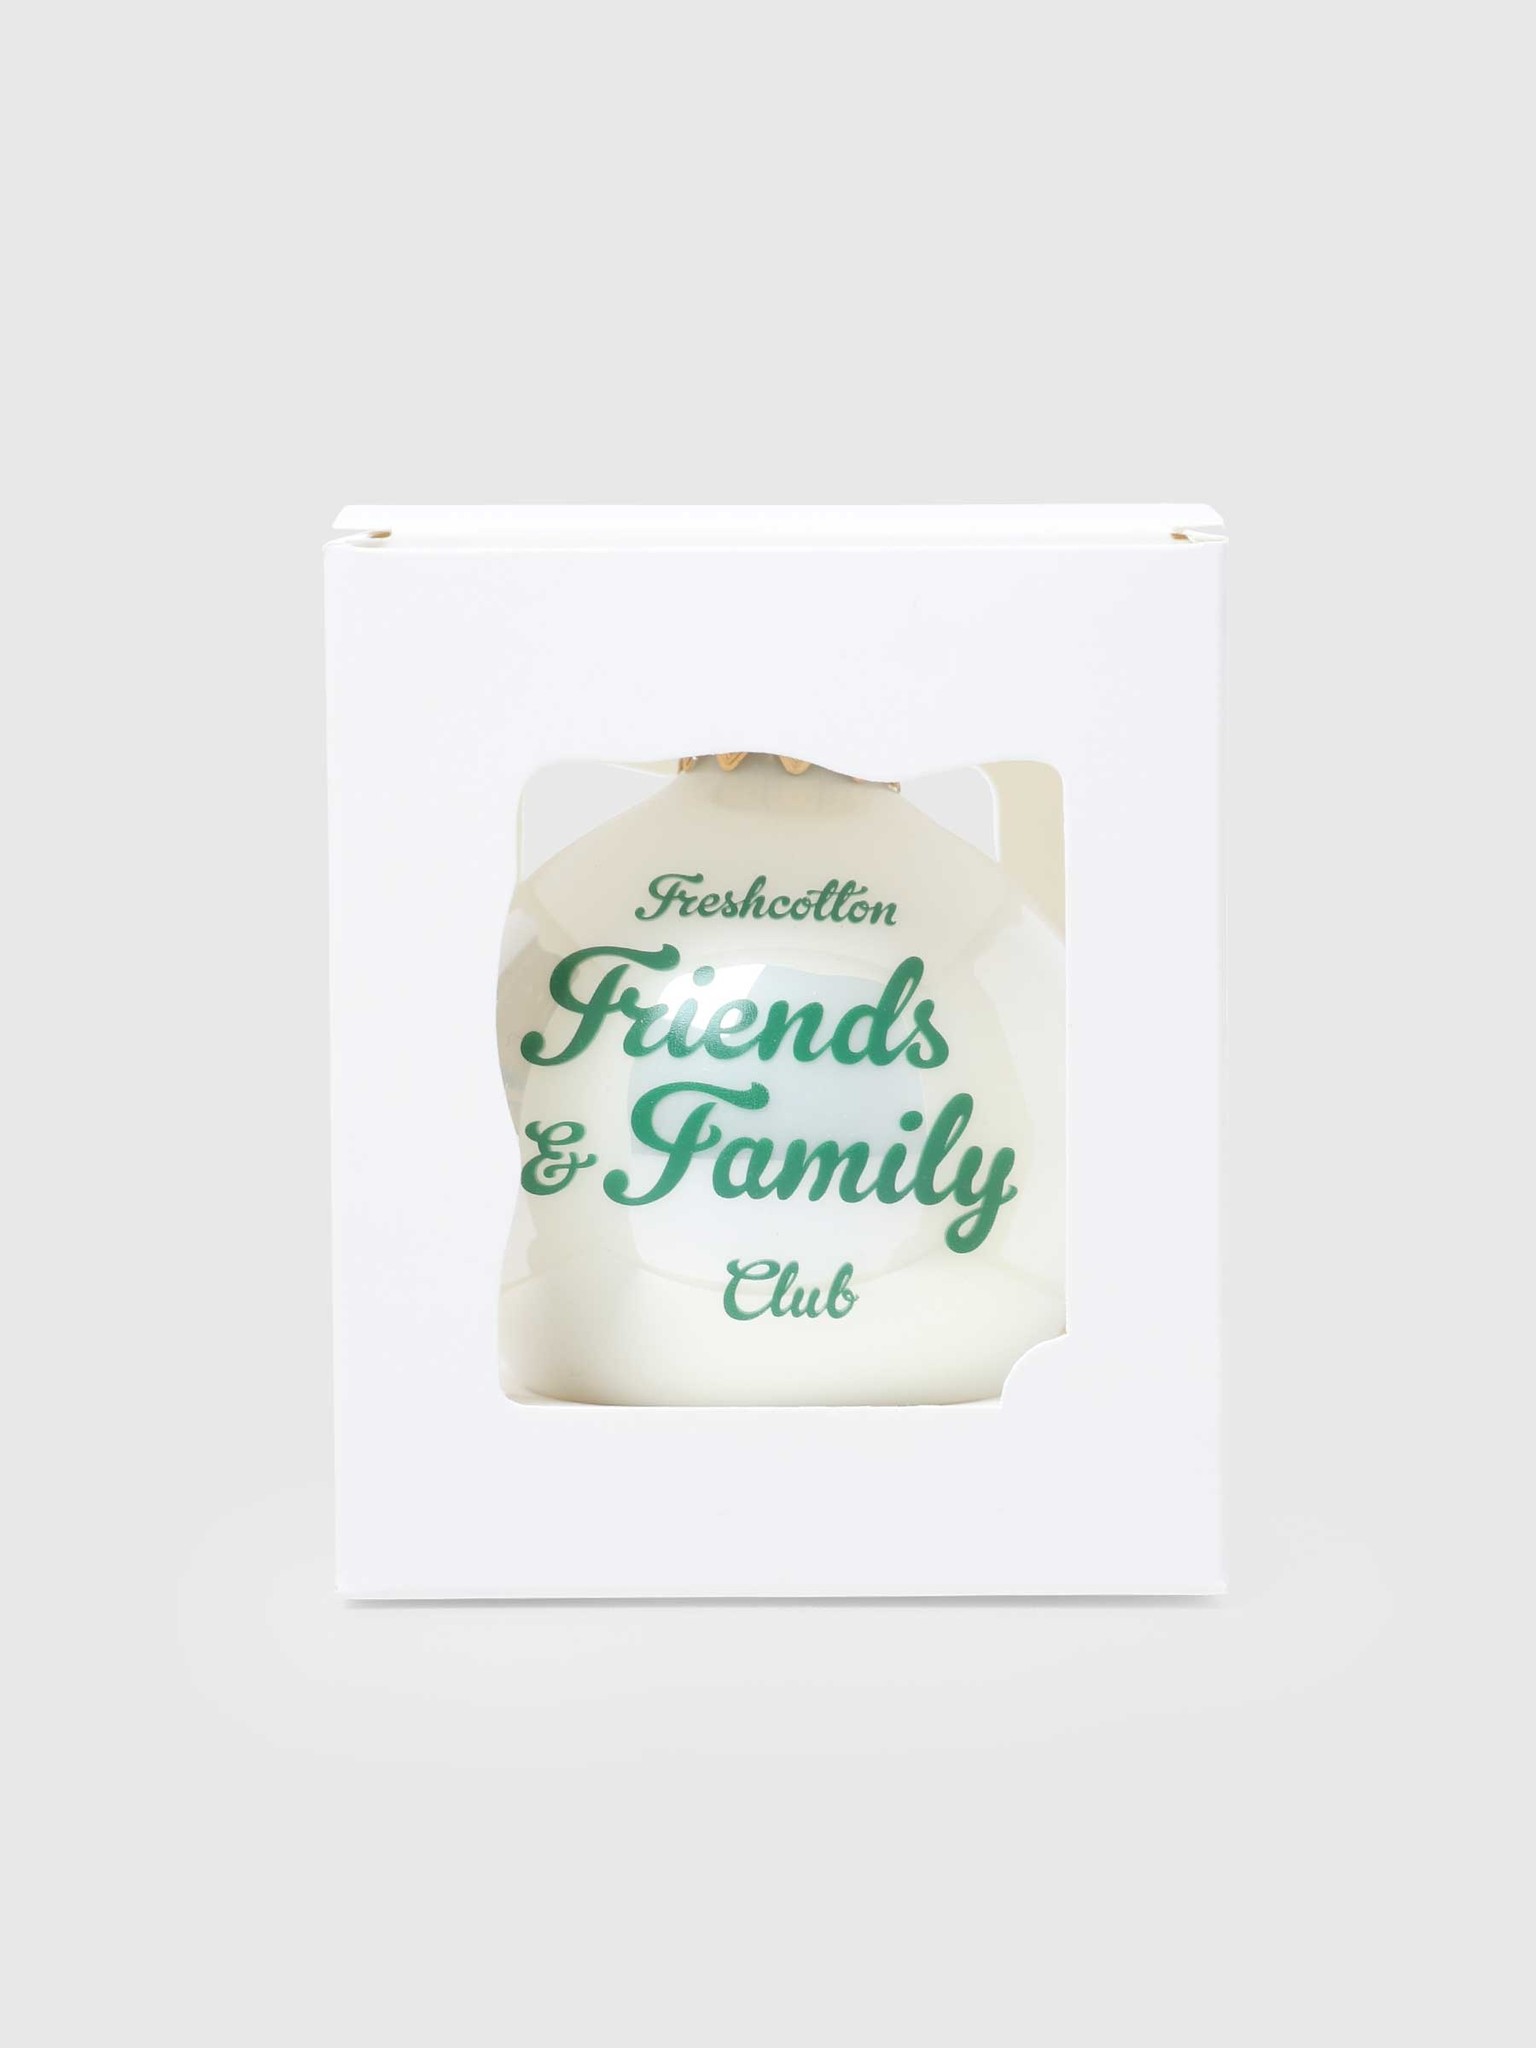 Freshcotton Friends & Family Christmas Ornament